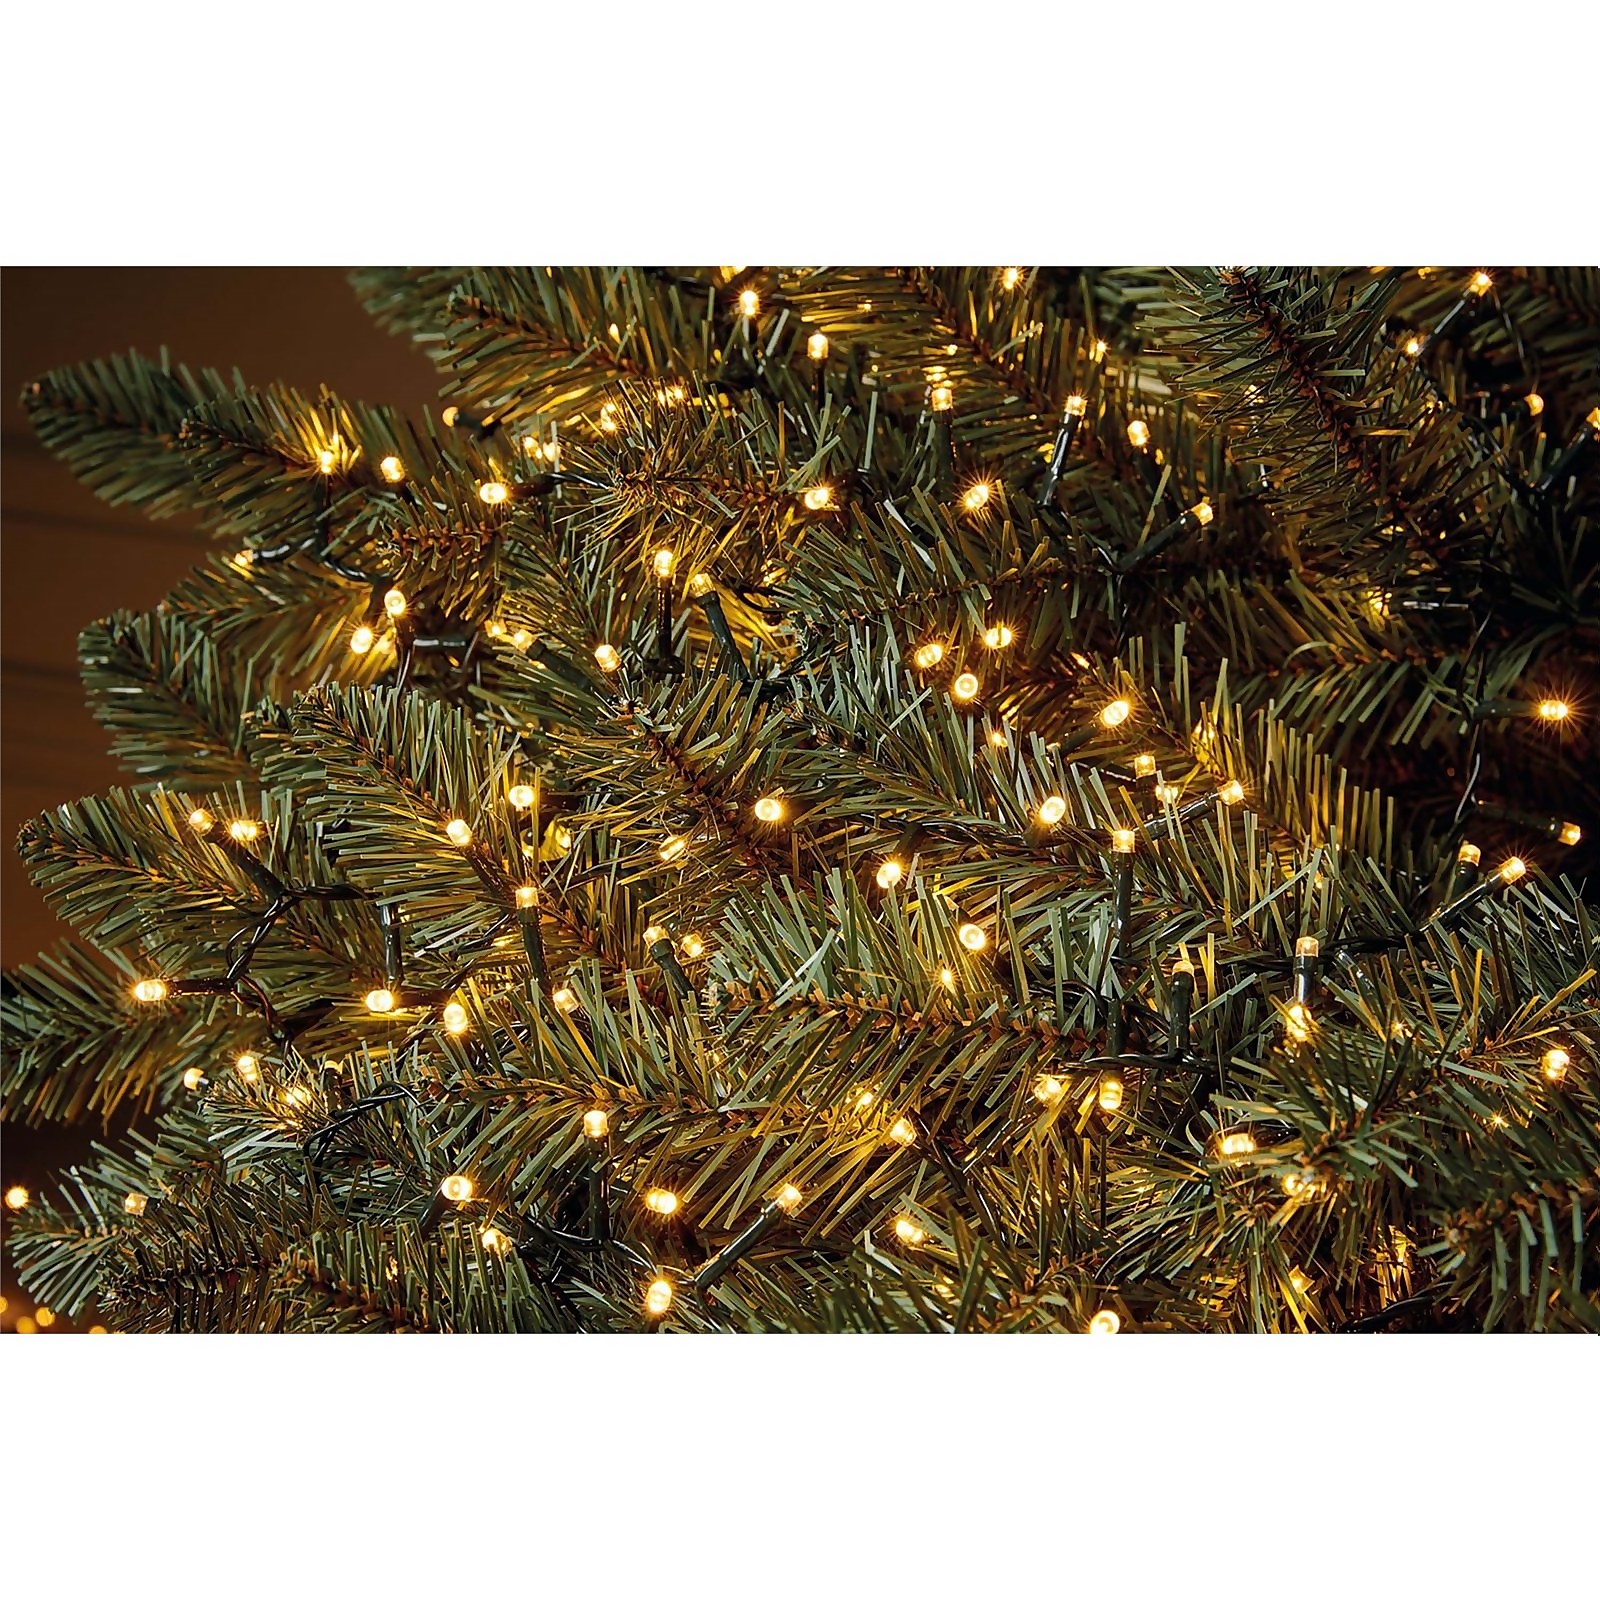 Photo of 800 Led String Christmas Tree Lights - Warm White